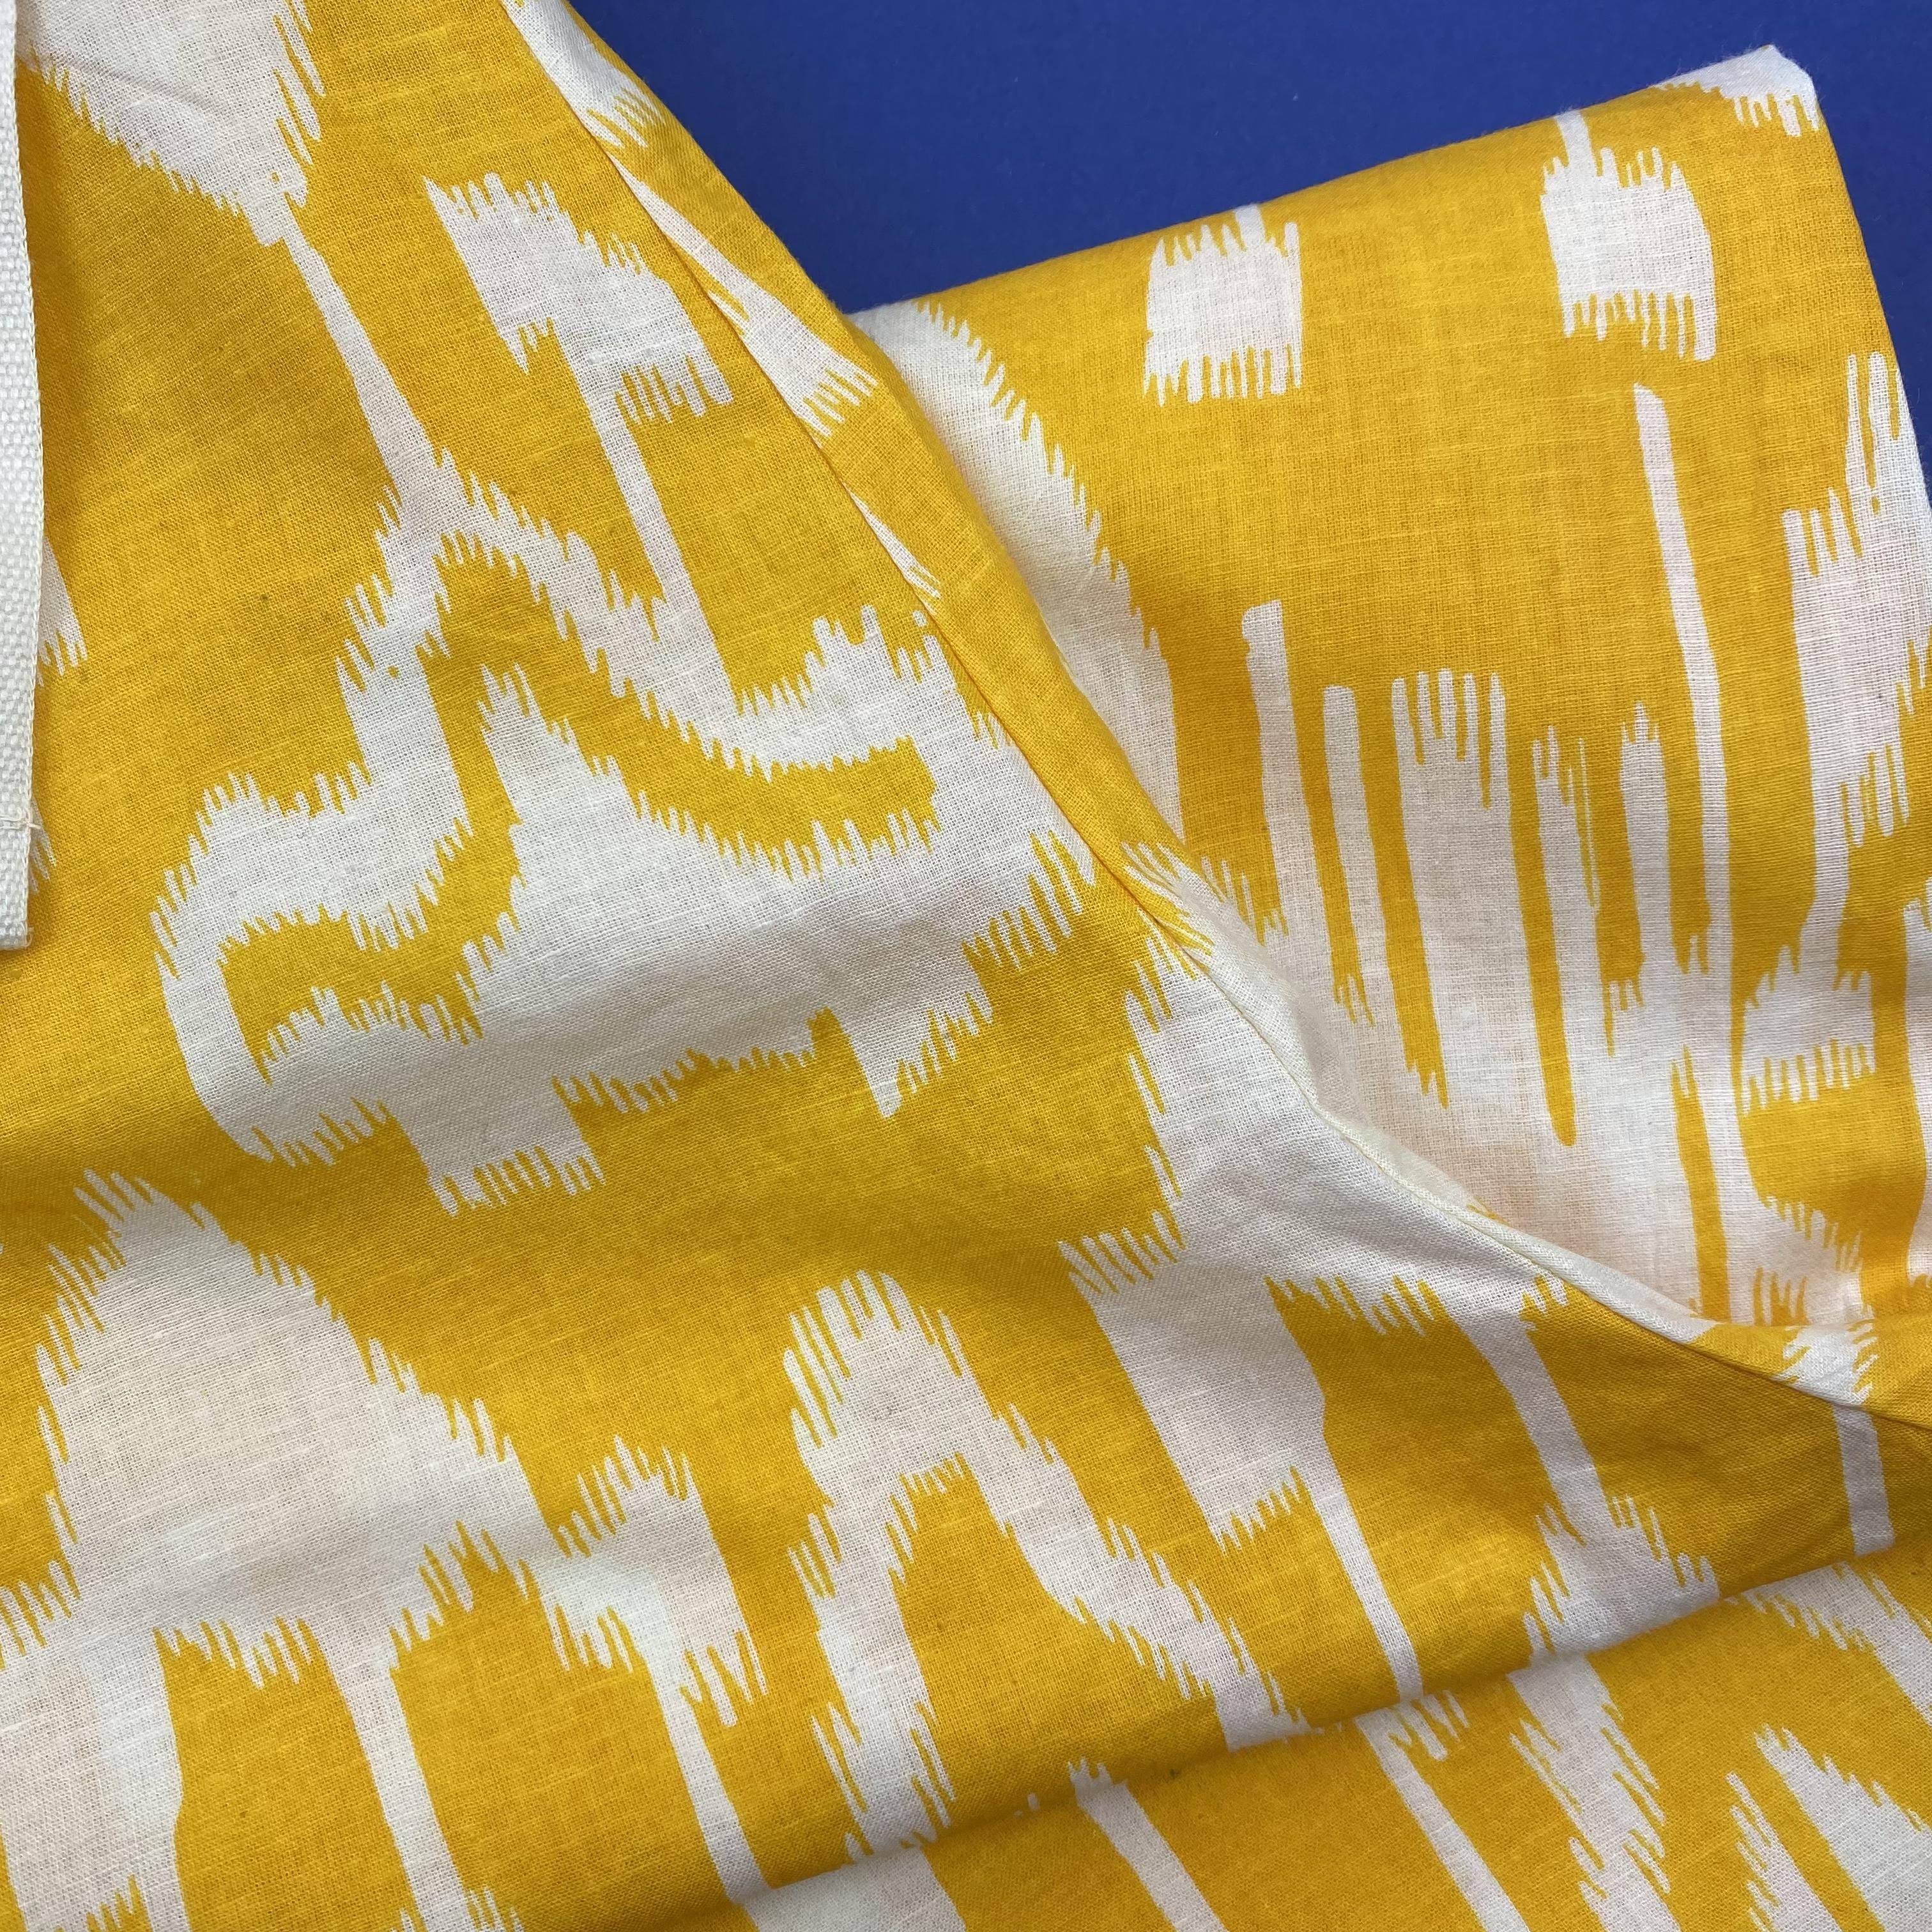 Mango yellow ikat print on hand made cotton pajama bottoms